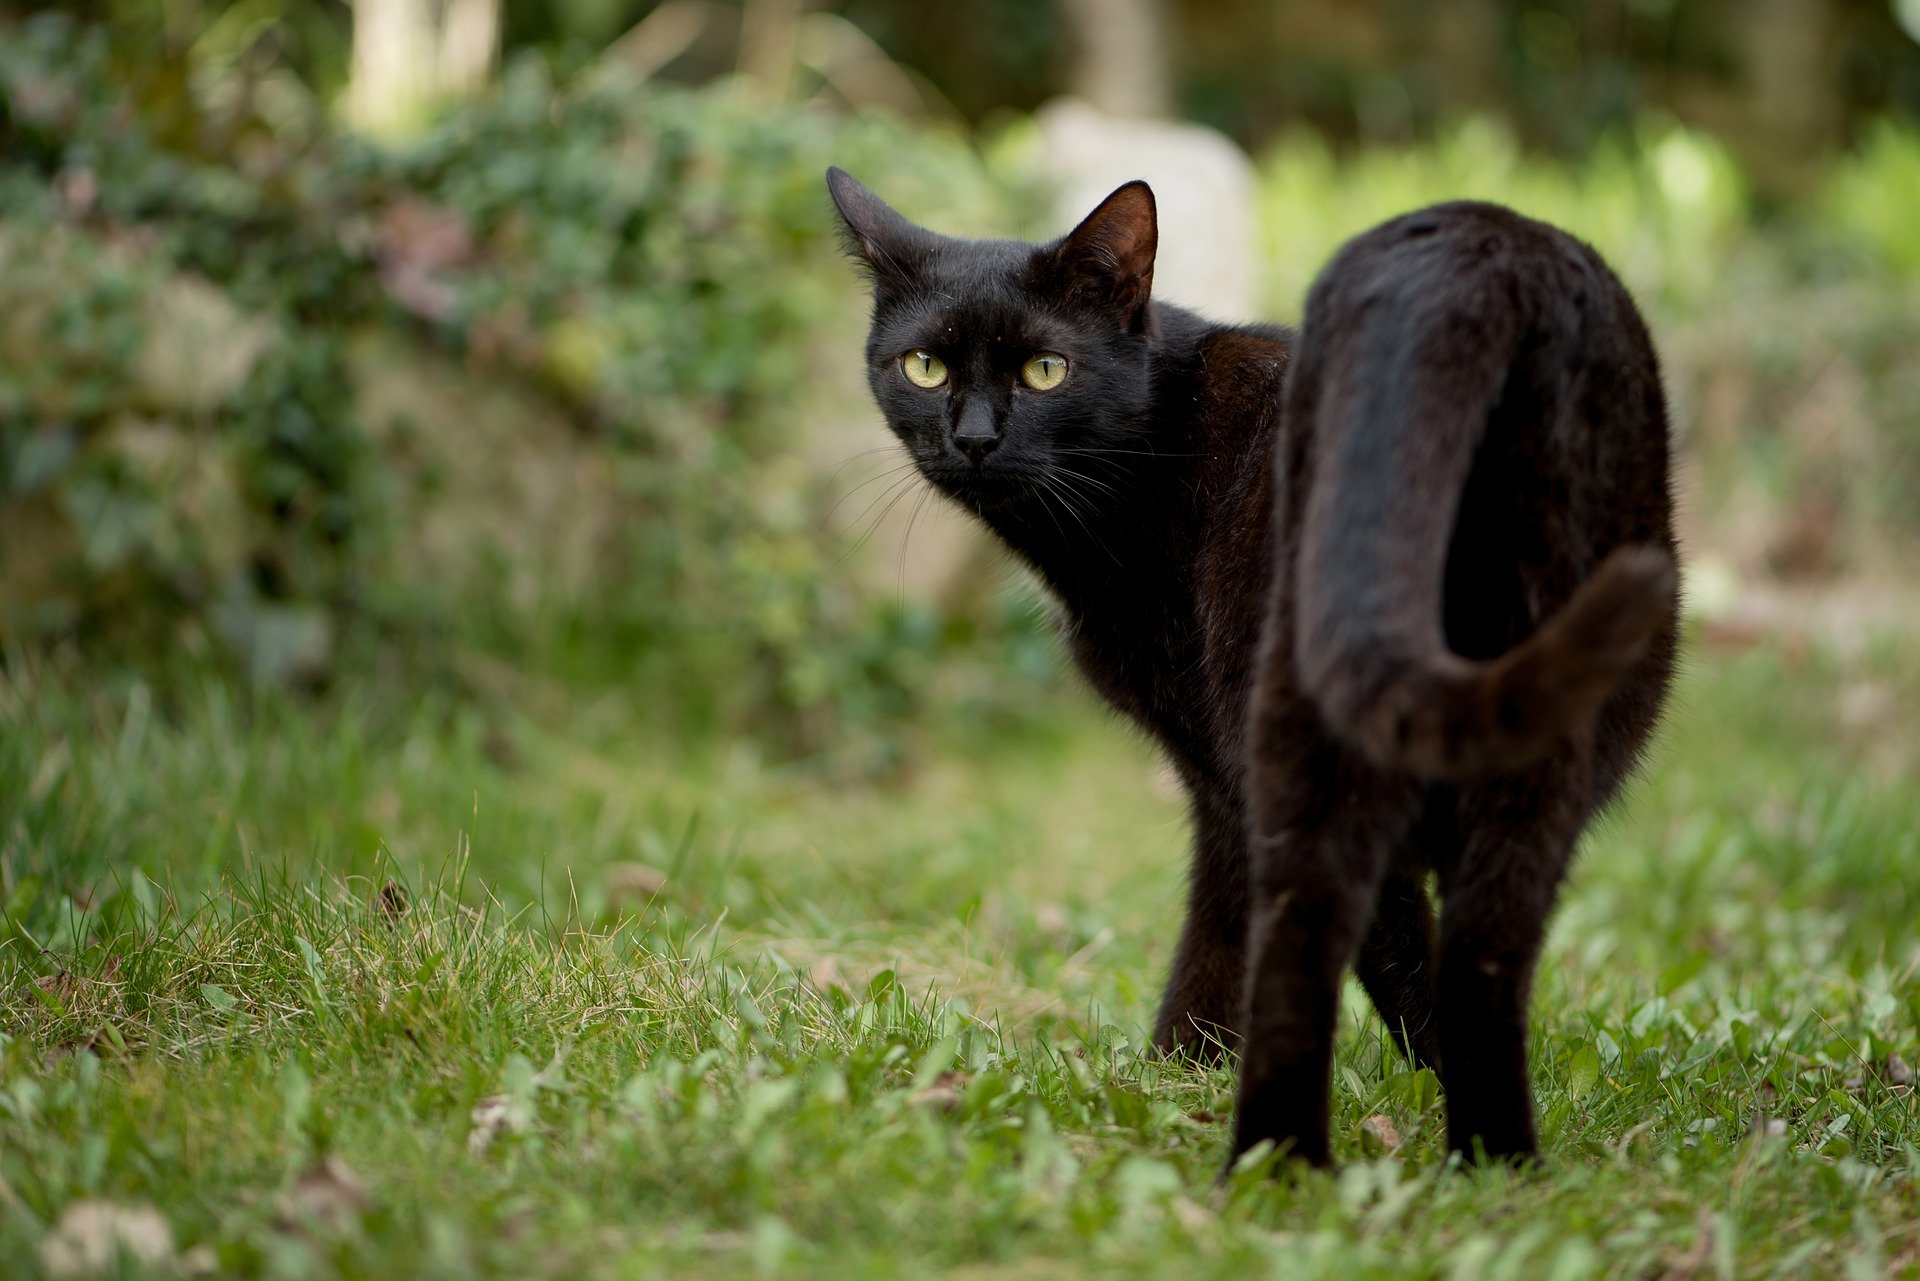 It’s Black Cat Appreciation Day today!